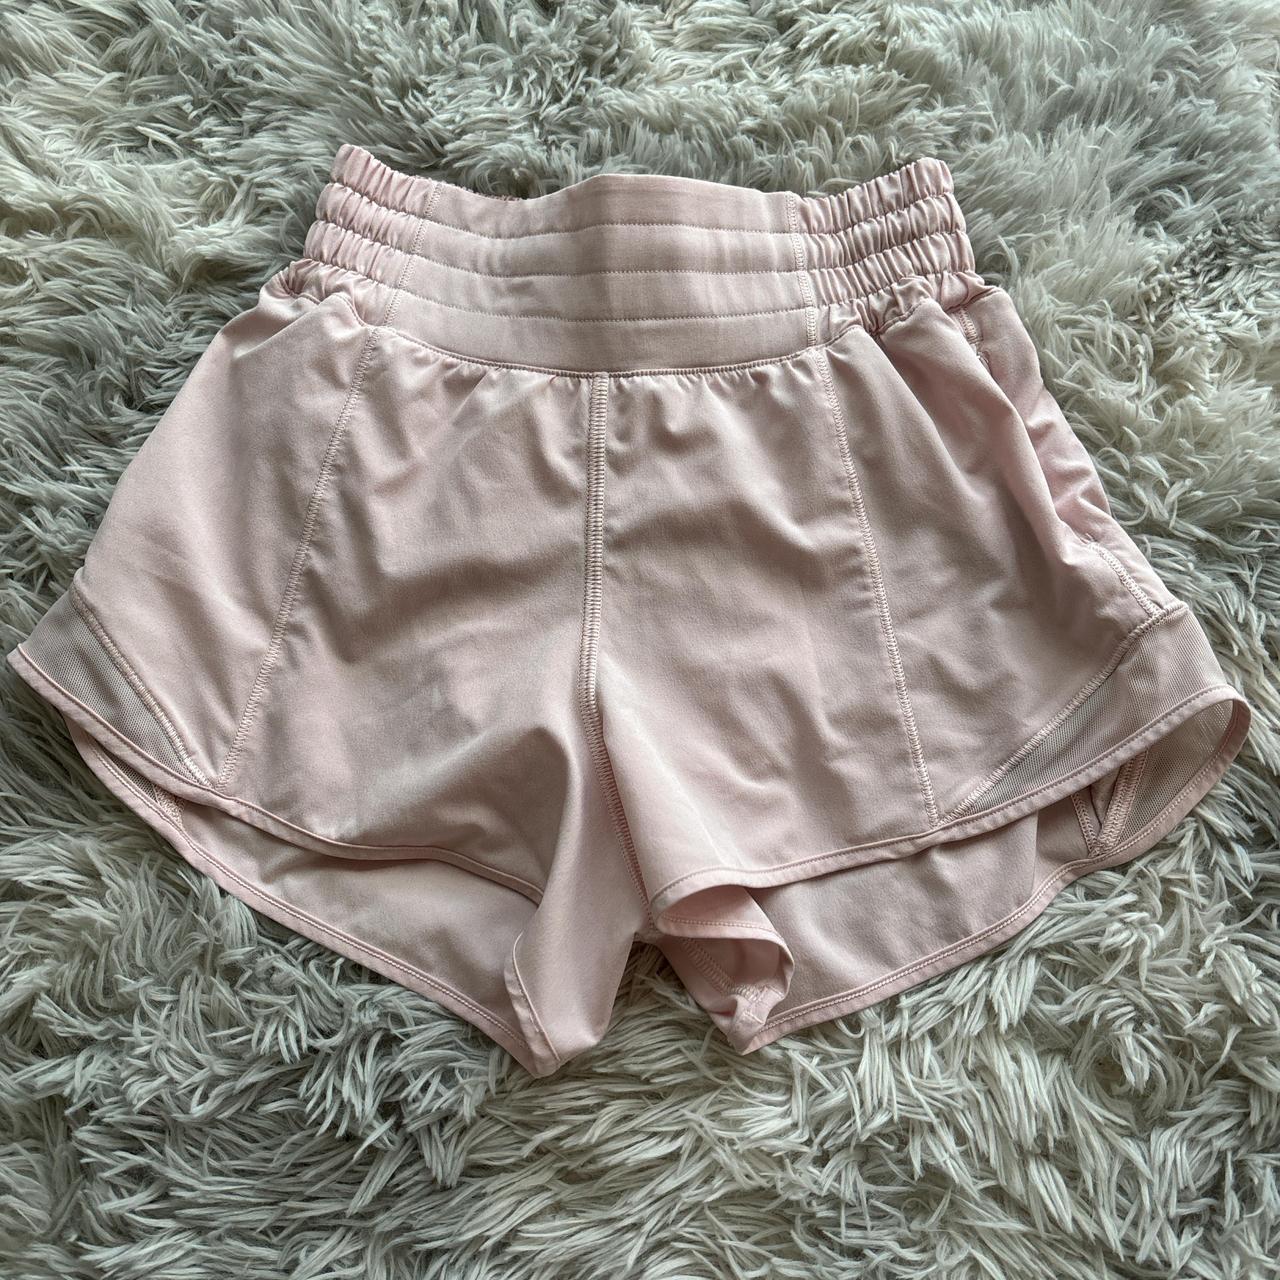 grey lululemon shorts size 8 4 inch inseam Perfect - Depop